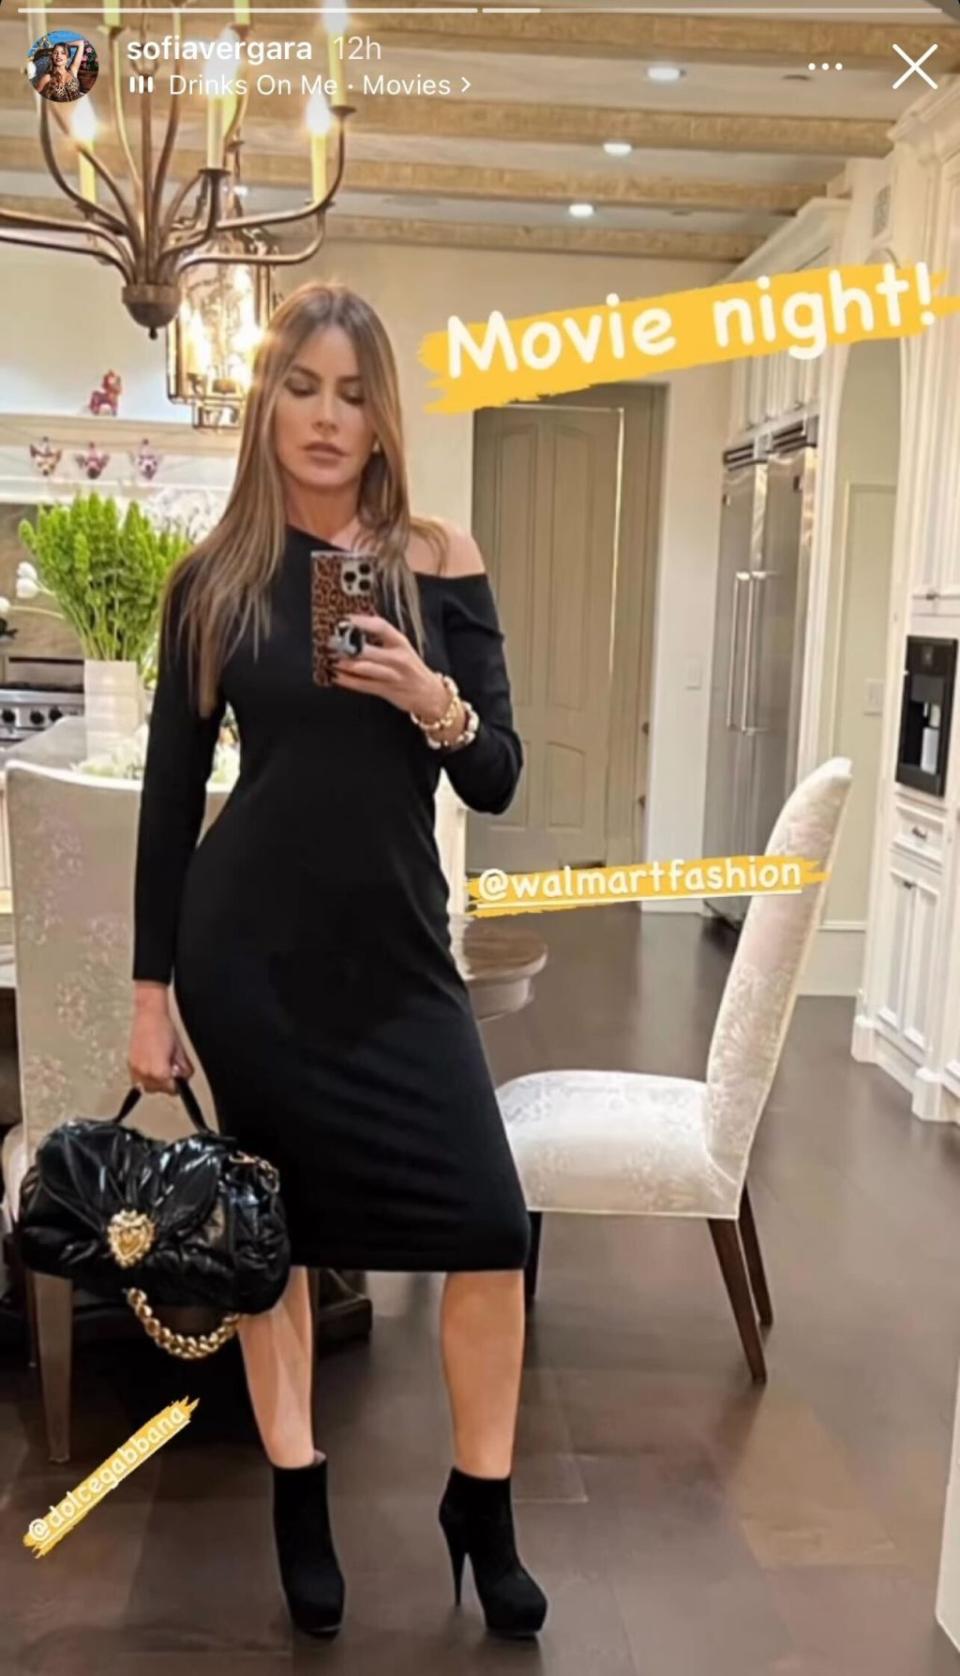 Sofia Vergara via Instagram stories in Walmart dress, chunky ankle boots and Dolce & Gabbana handbag.